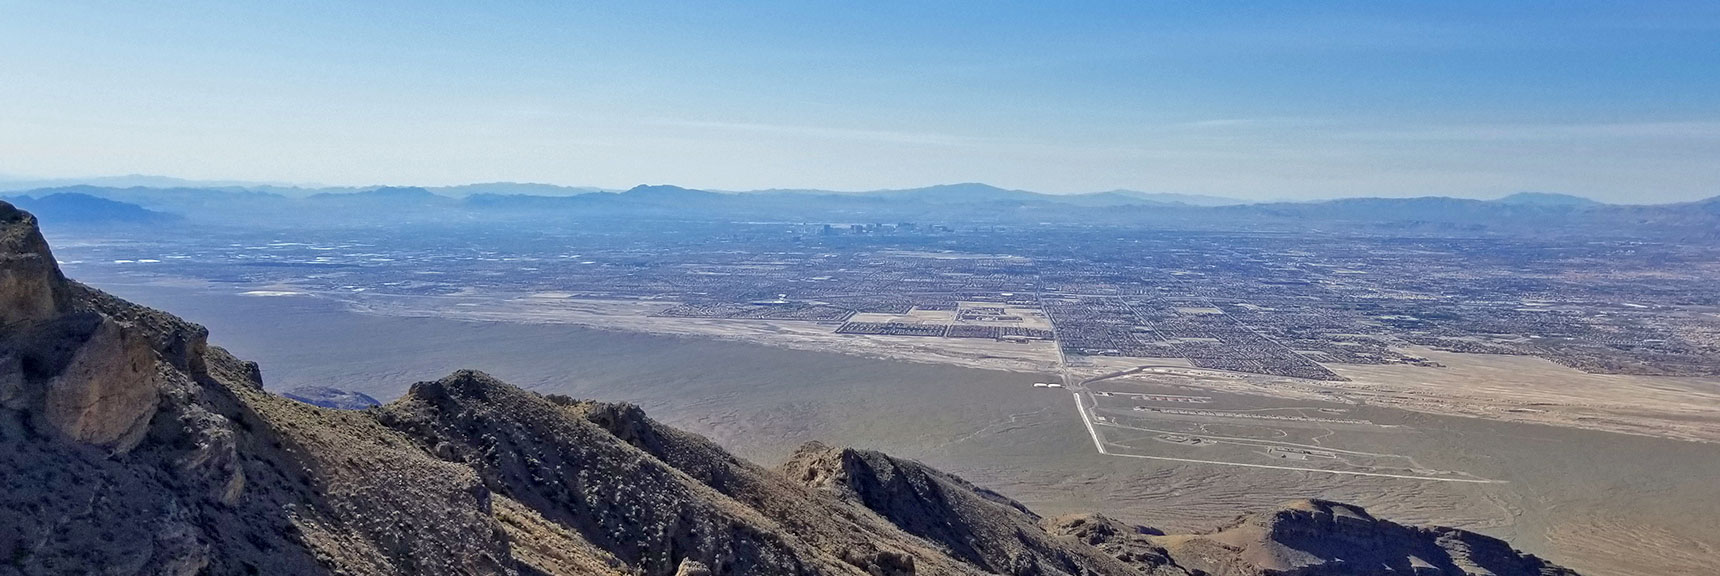 View of Las Vegas Upon Topping the Mid-Summit Ridge| Gass Peak Eastern Summit Ultra-marathon Adventure, Nevada